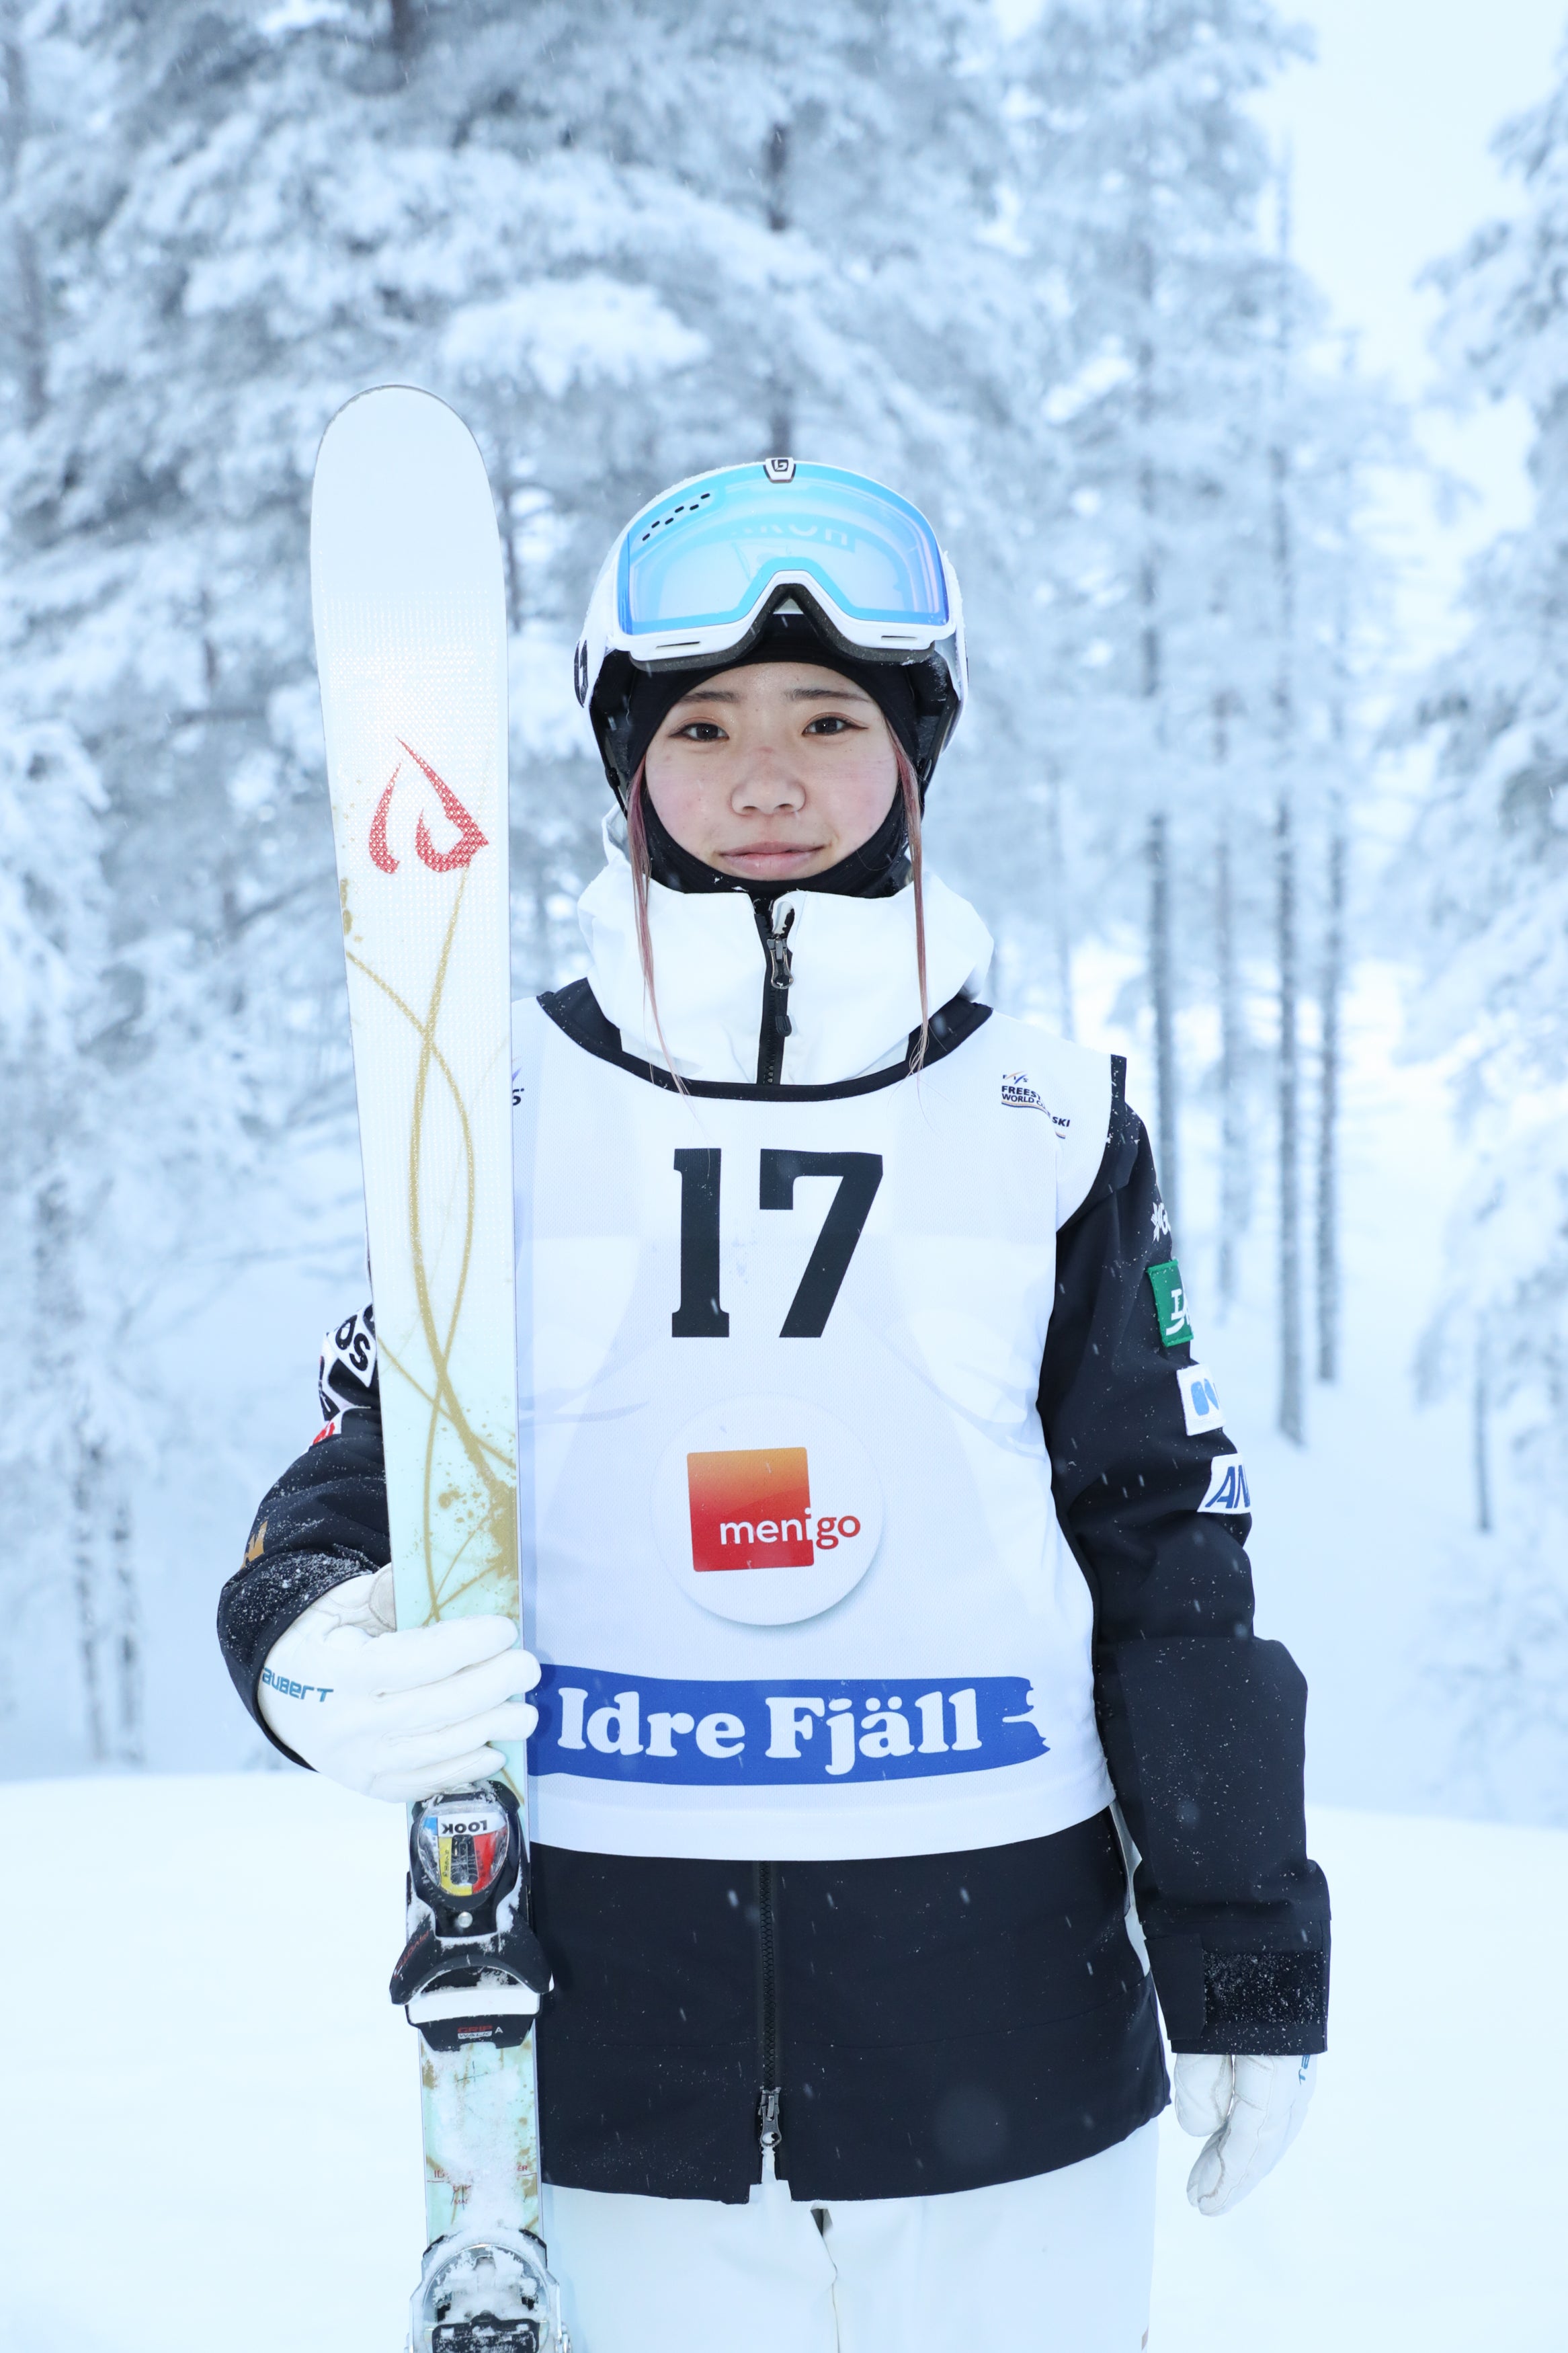 Photo of Shiori Asano - Mogul Skier